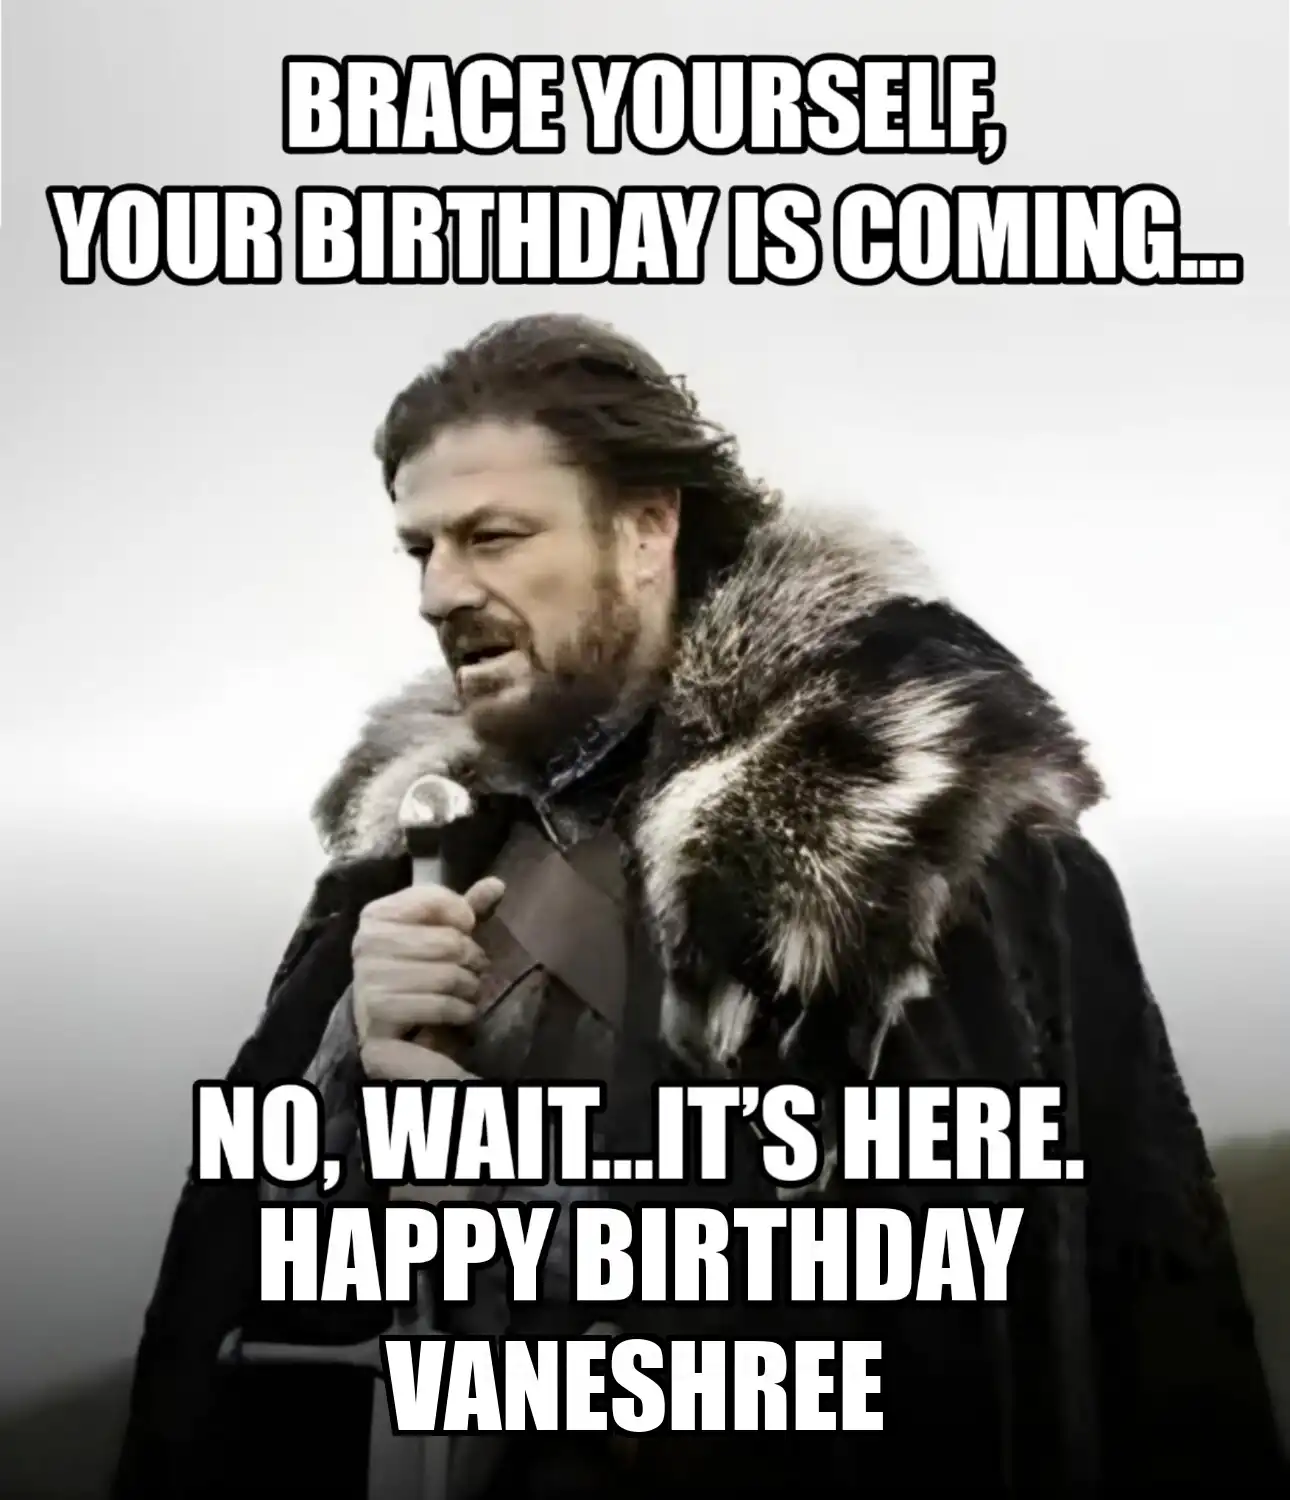 Happy Birthday Vaneshree Brace Yourself Your Birthday Is Coming Meme